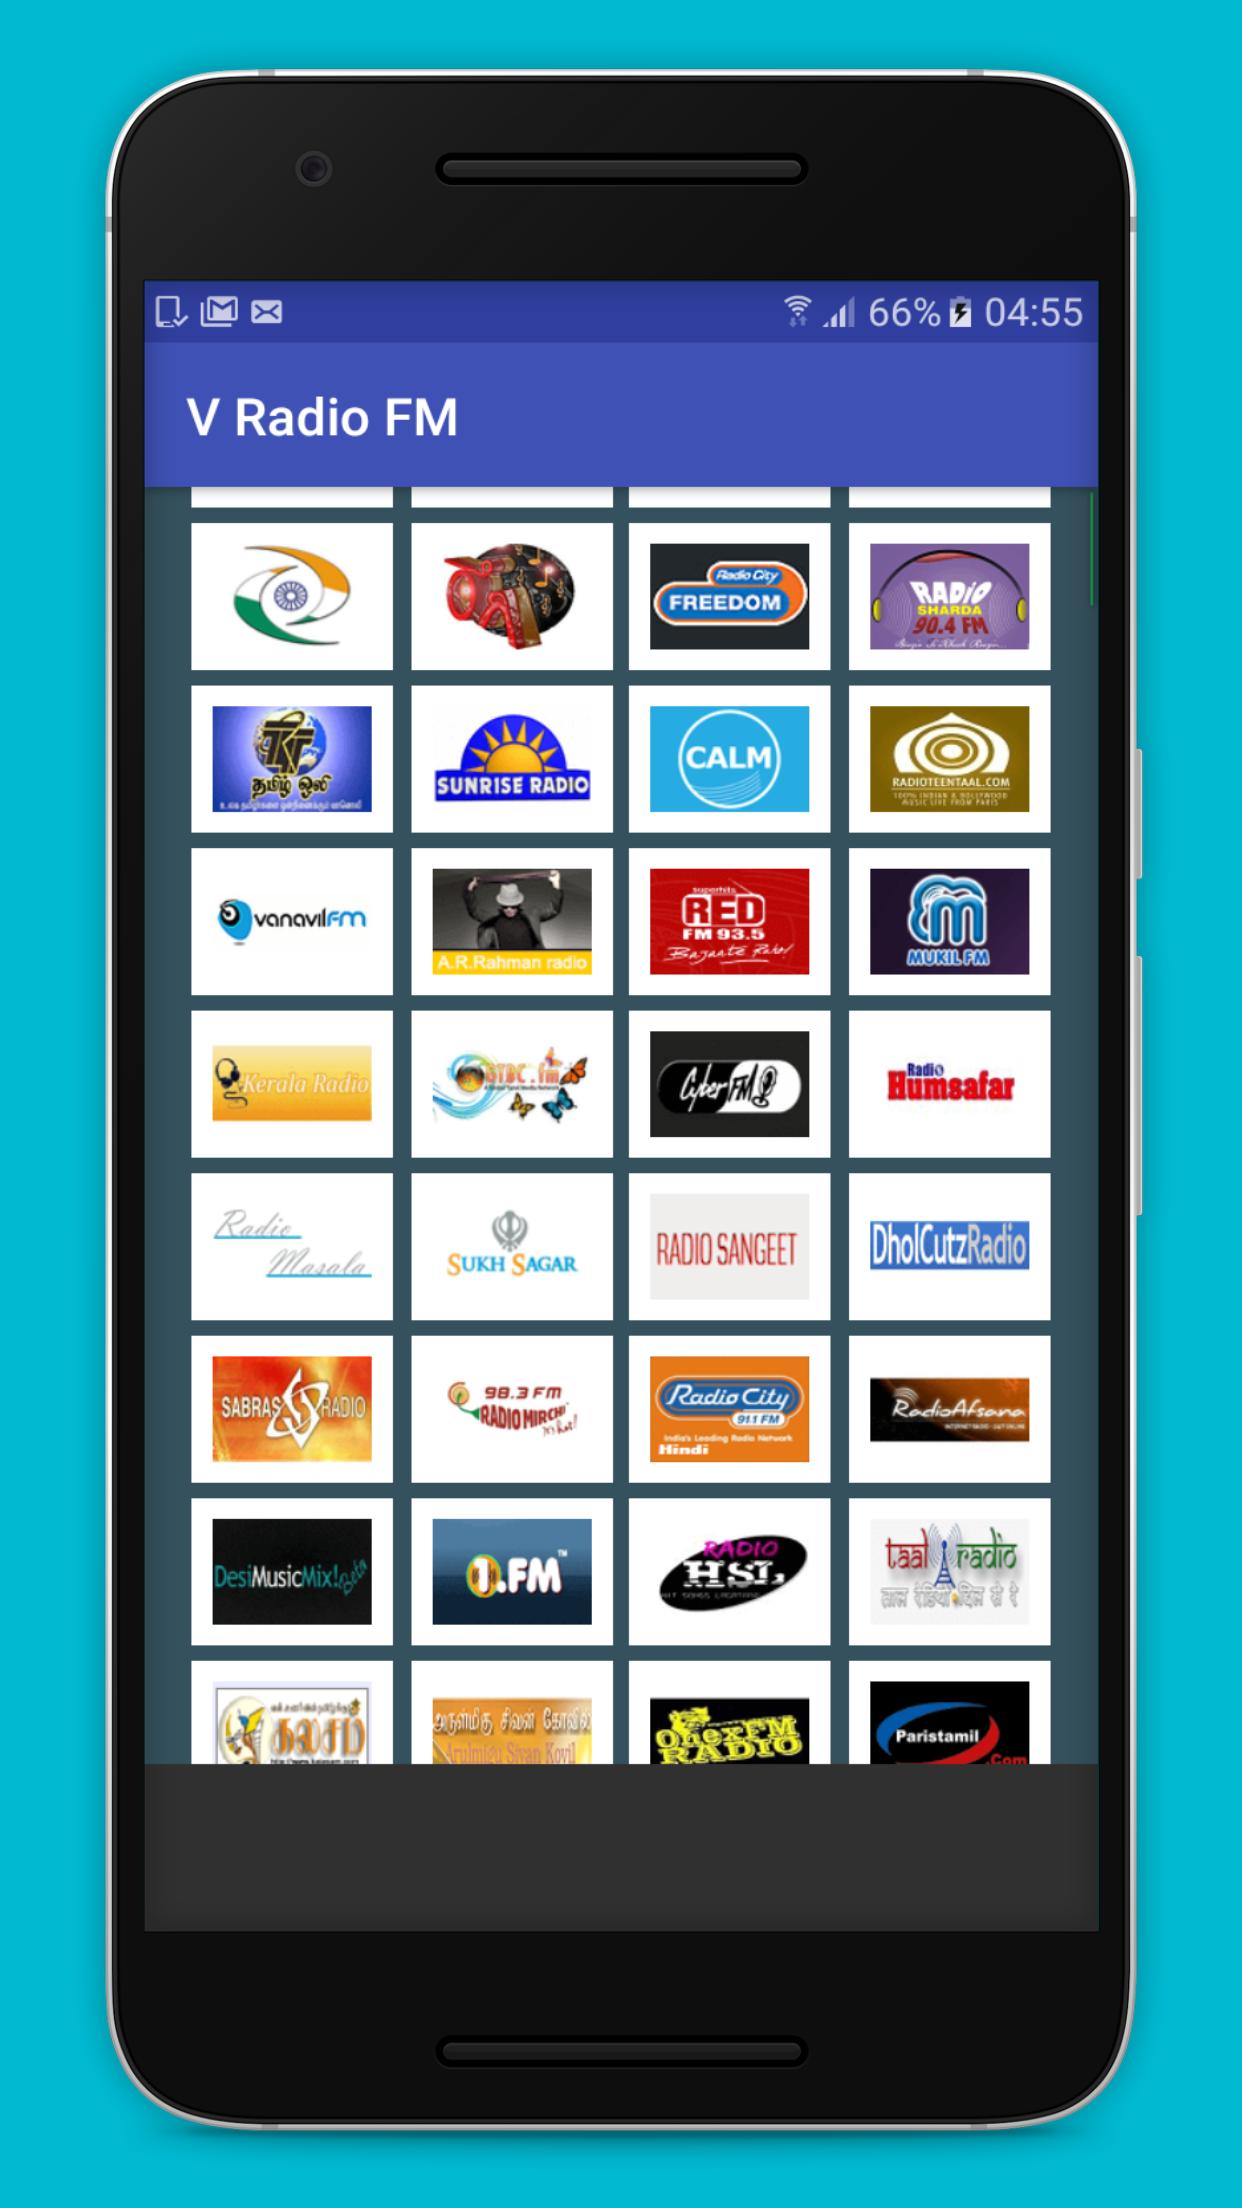 Radio FM - Best FM Radio App for Android - APK Download